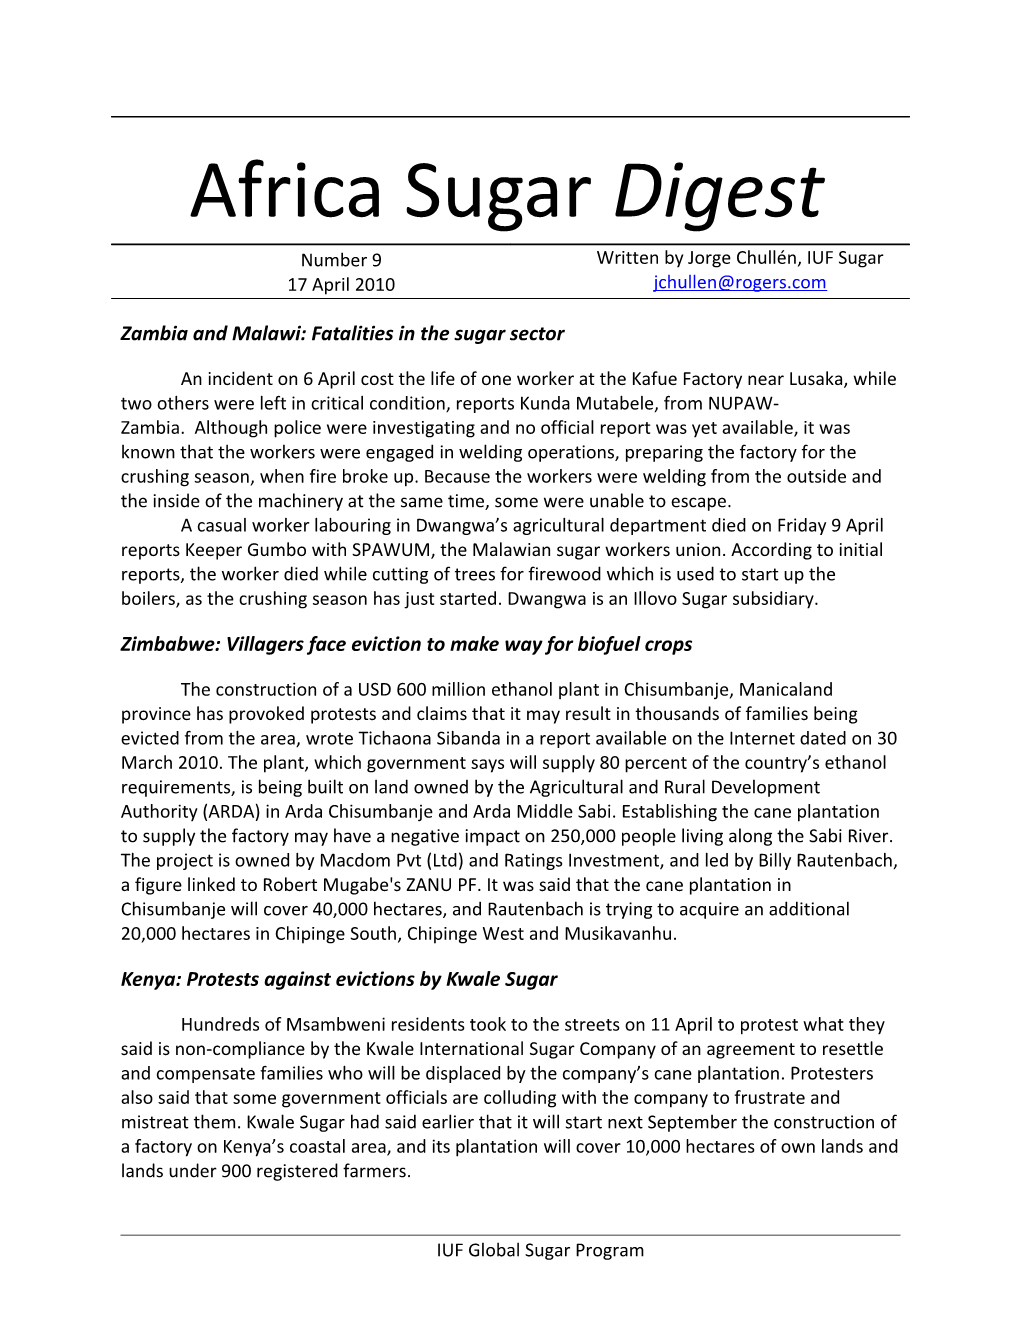 Zambiaand Malawi: Fatalities in the Sugar Sector